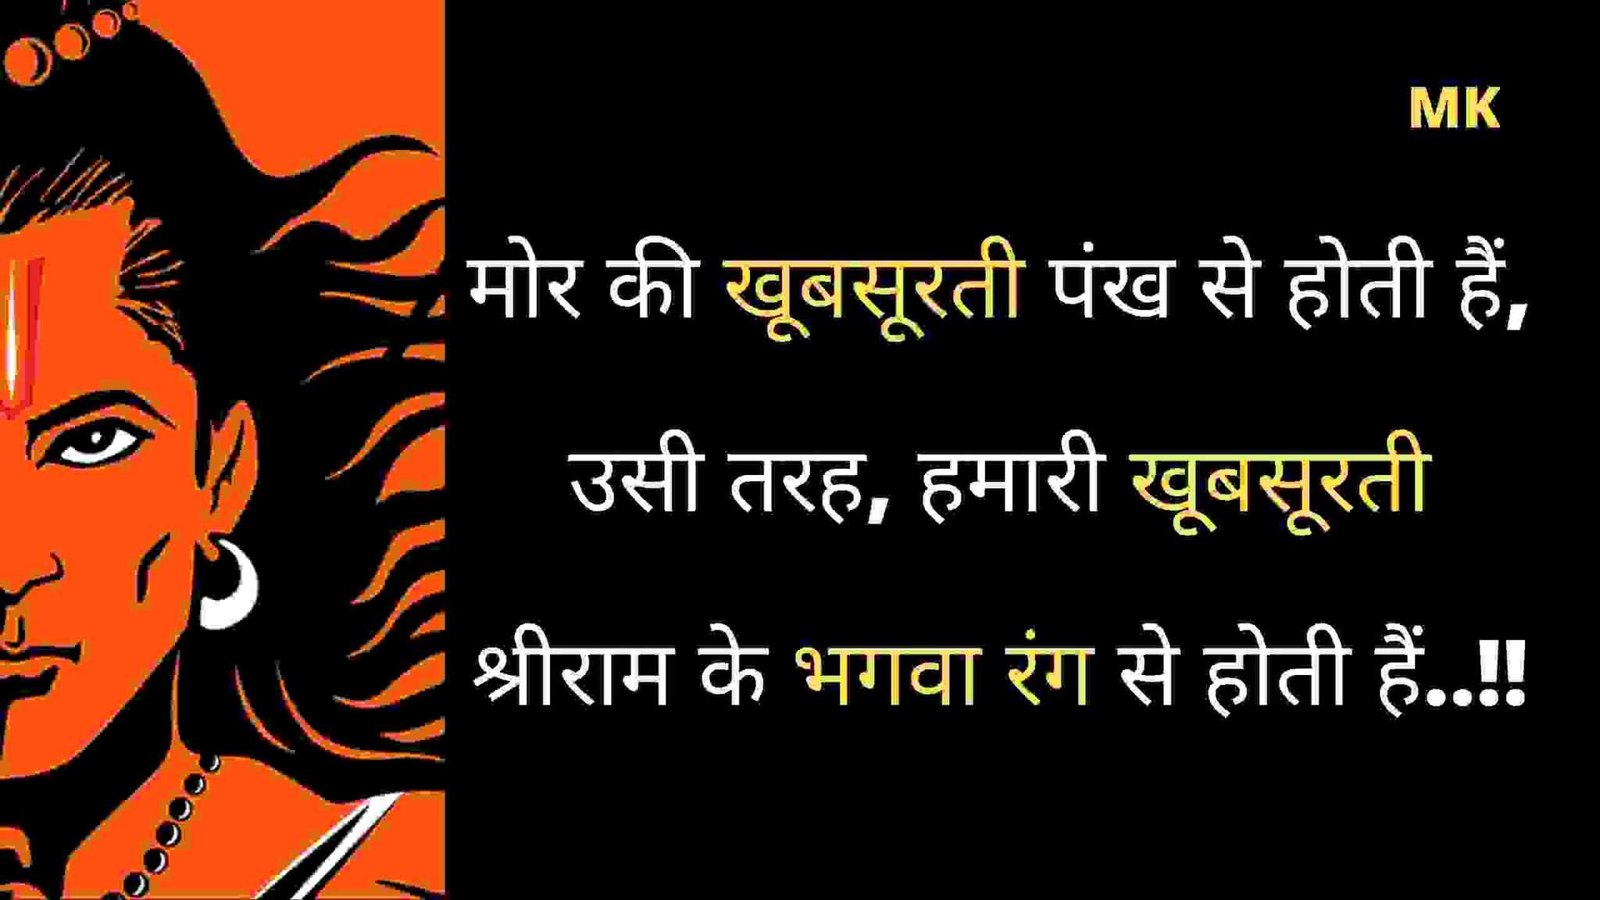 Kattar hindu Jay Shri Ram Status in Hindi with images by multi-knowledge.com